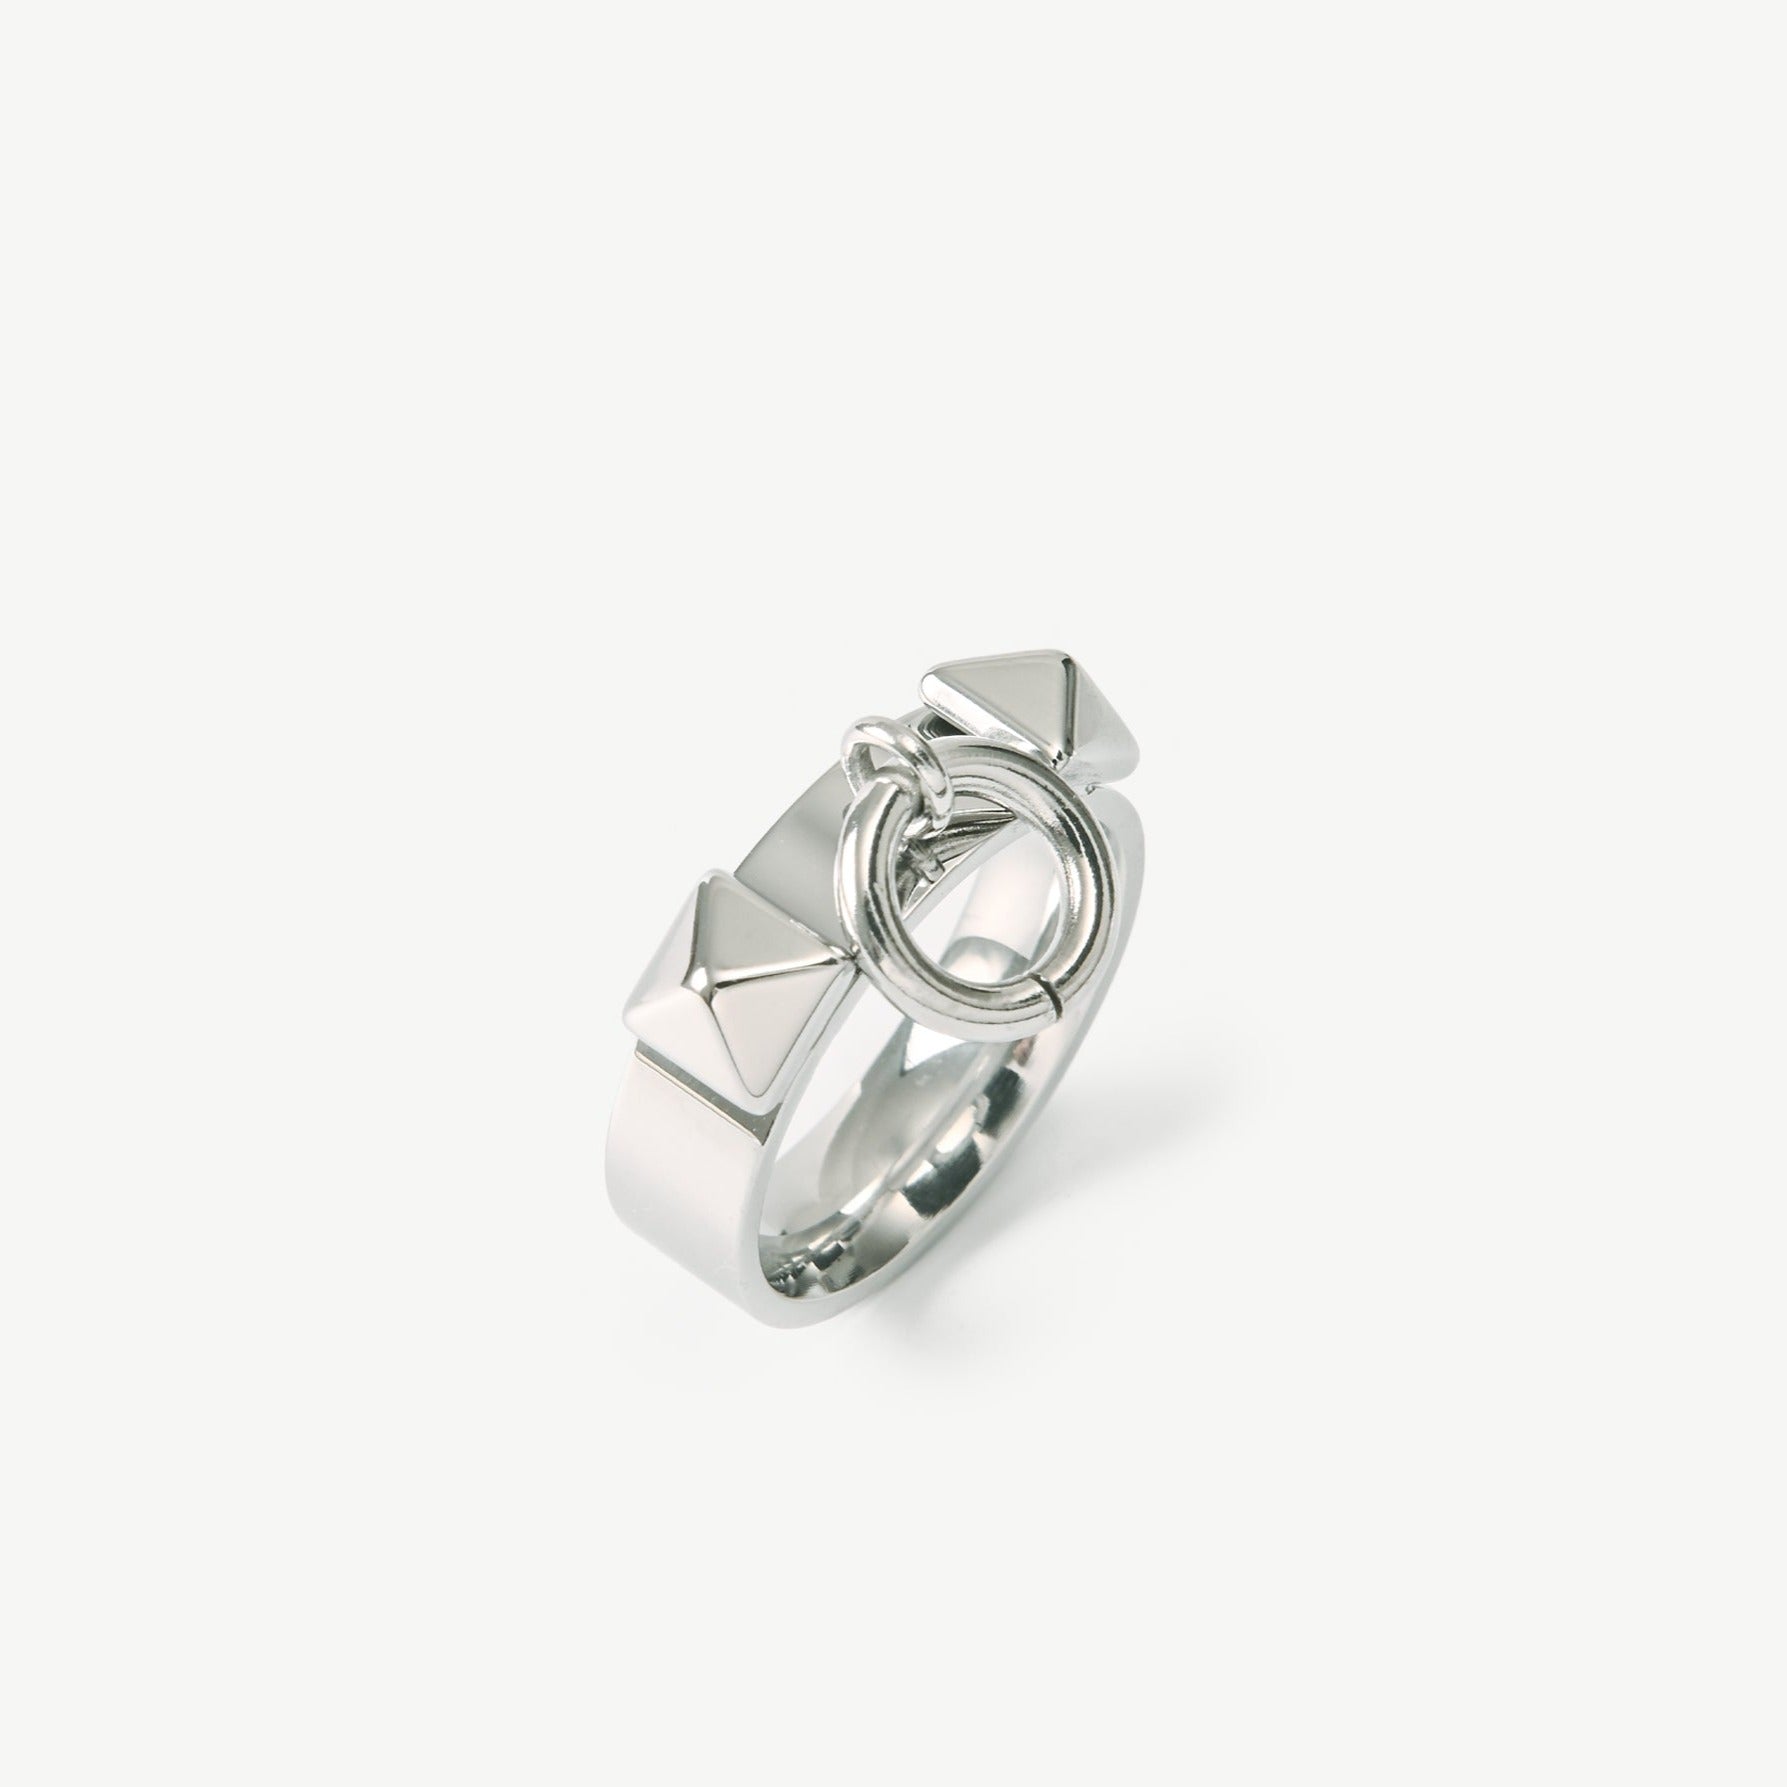 Silver Angitia Ring - EzaVision - Ring - Silver Angitia Ring - EzaVision